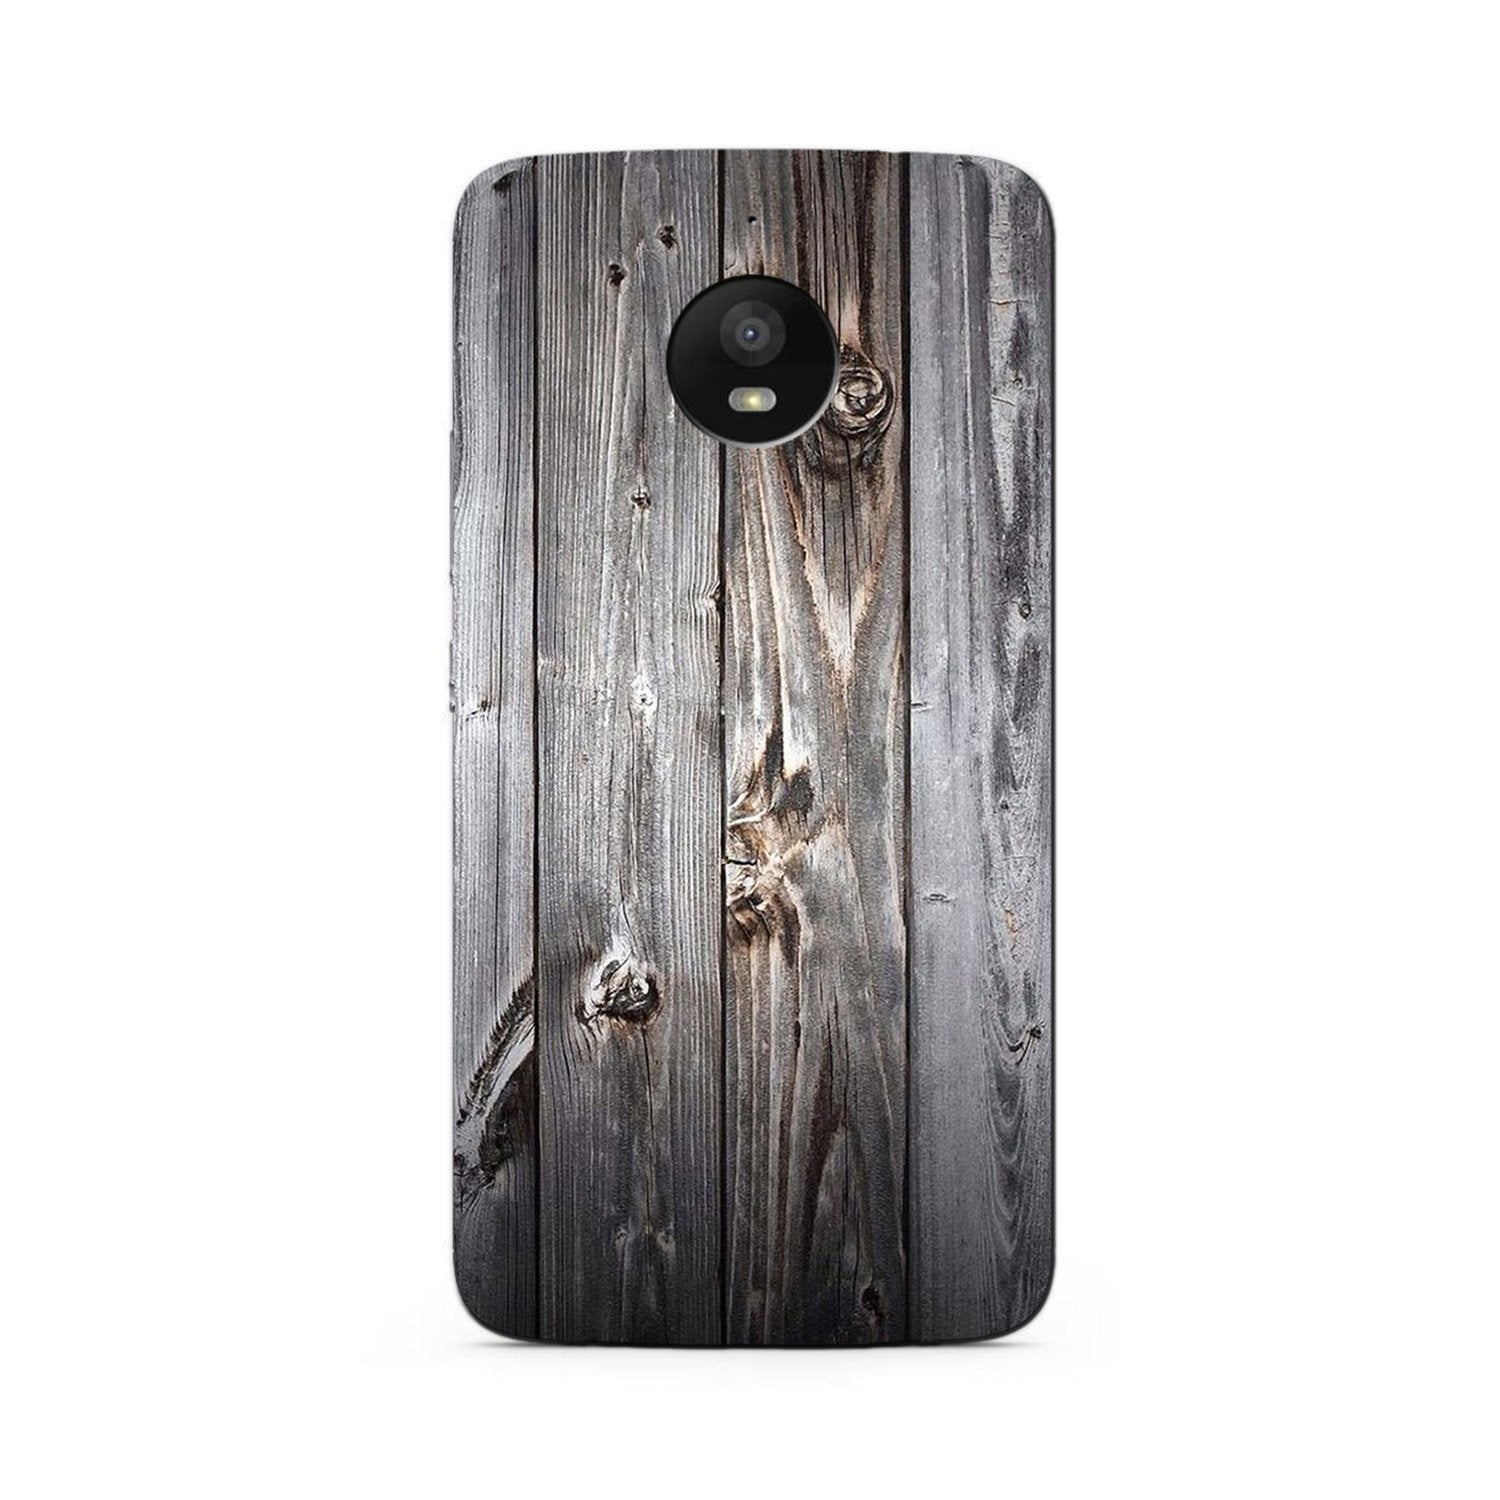 Wooden Look Case for Moto G5s(Design - 114)